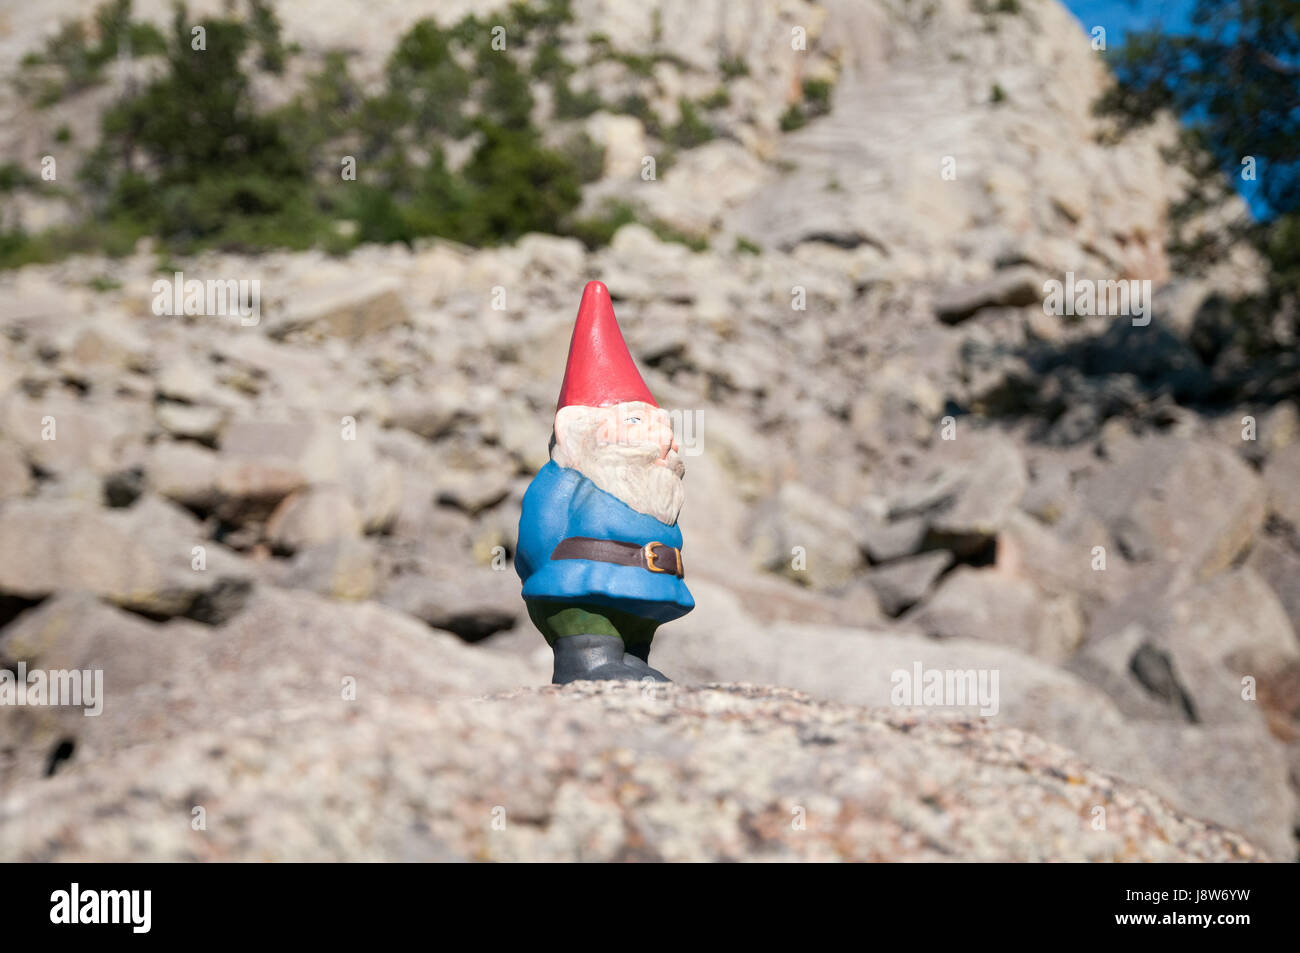 Garden gnome standing on rocks Stock Photo